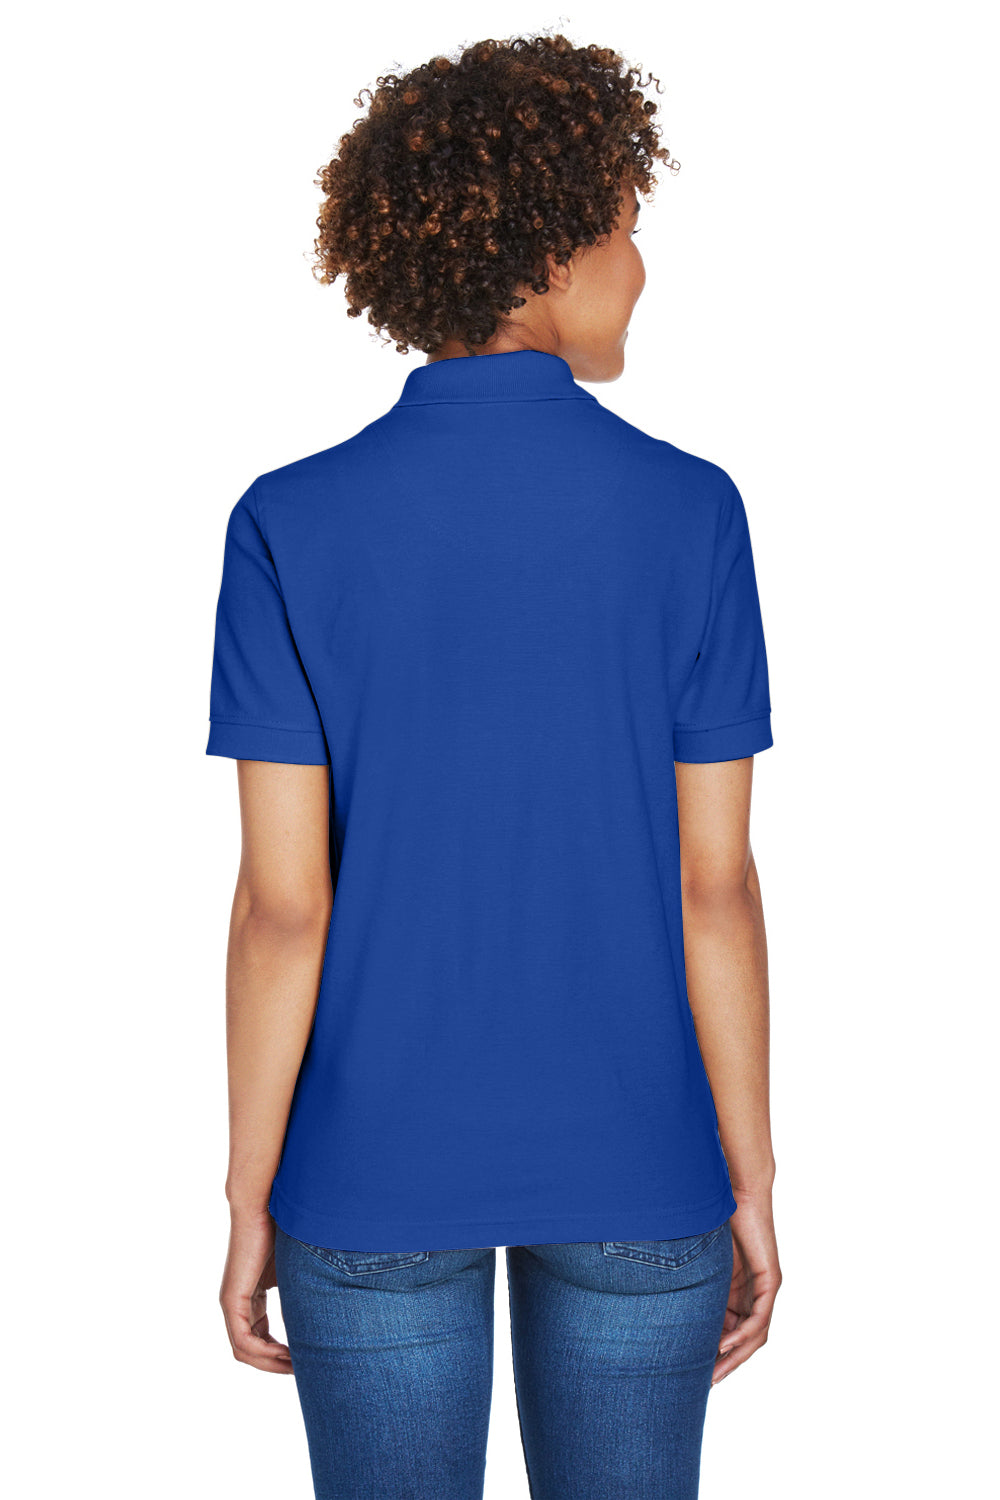 UltraClub 8541 Womens Whisper Short Sleeve Polo Shirt Royal Blue Back